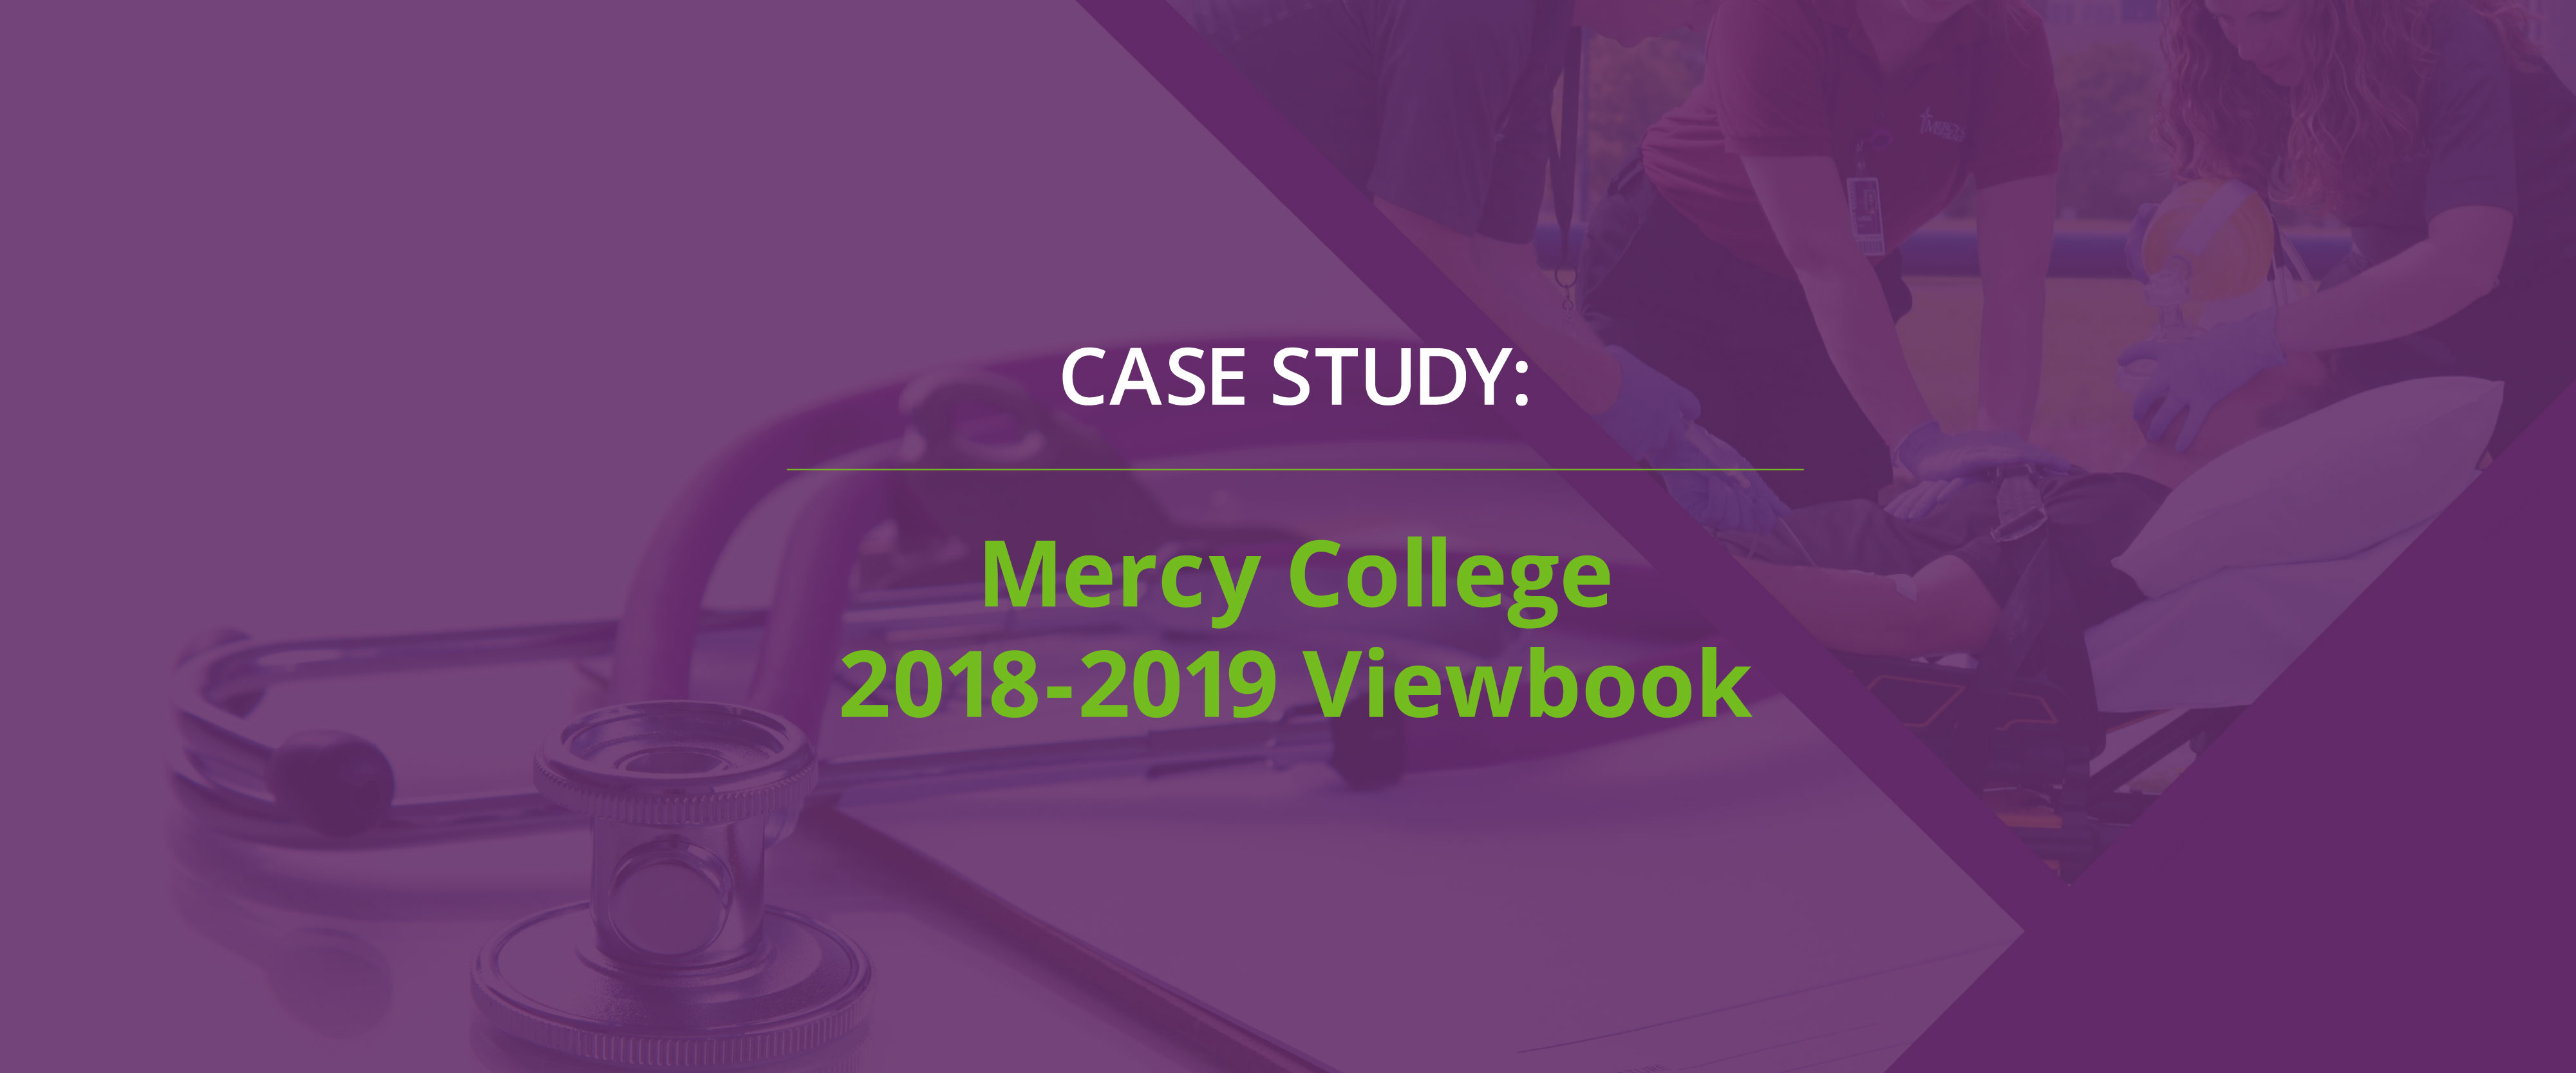 CASE STUDY MERCY COLLEGE OF HEALTH SCIENCES 20182019 VIEWBOOK